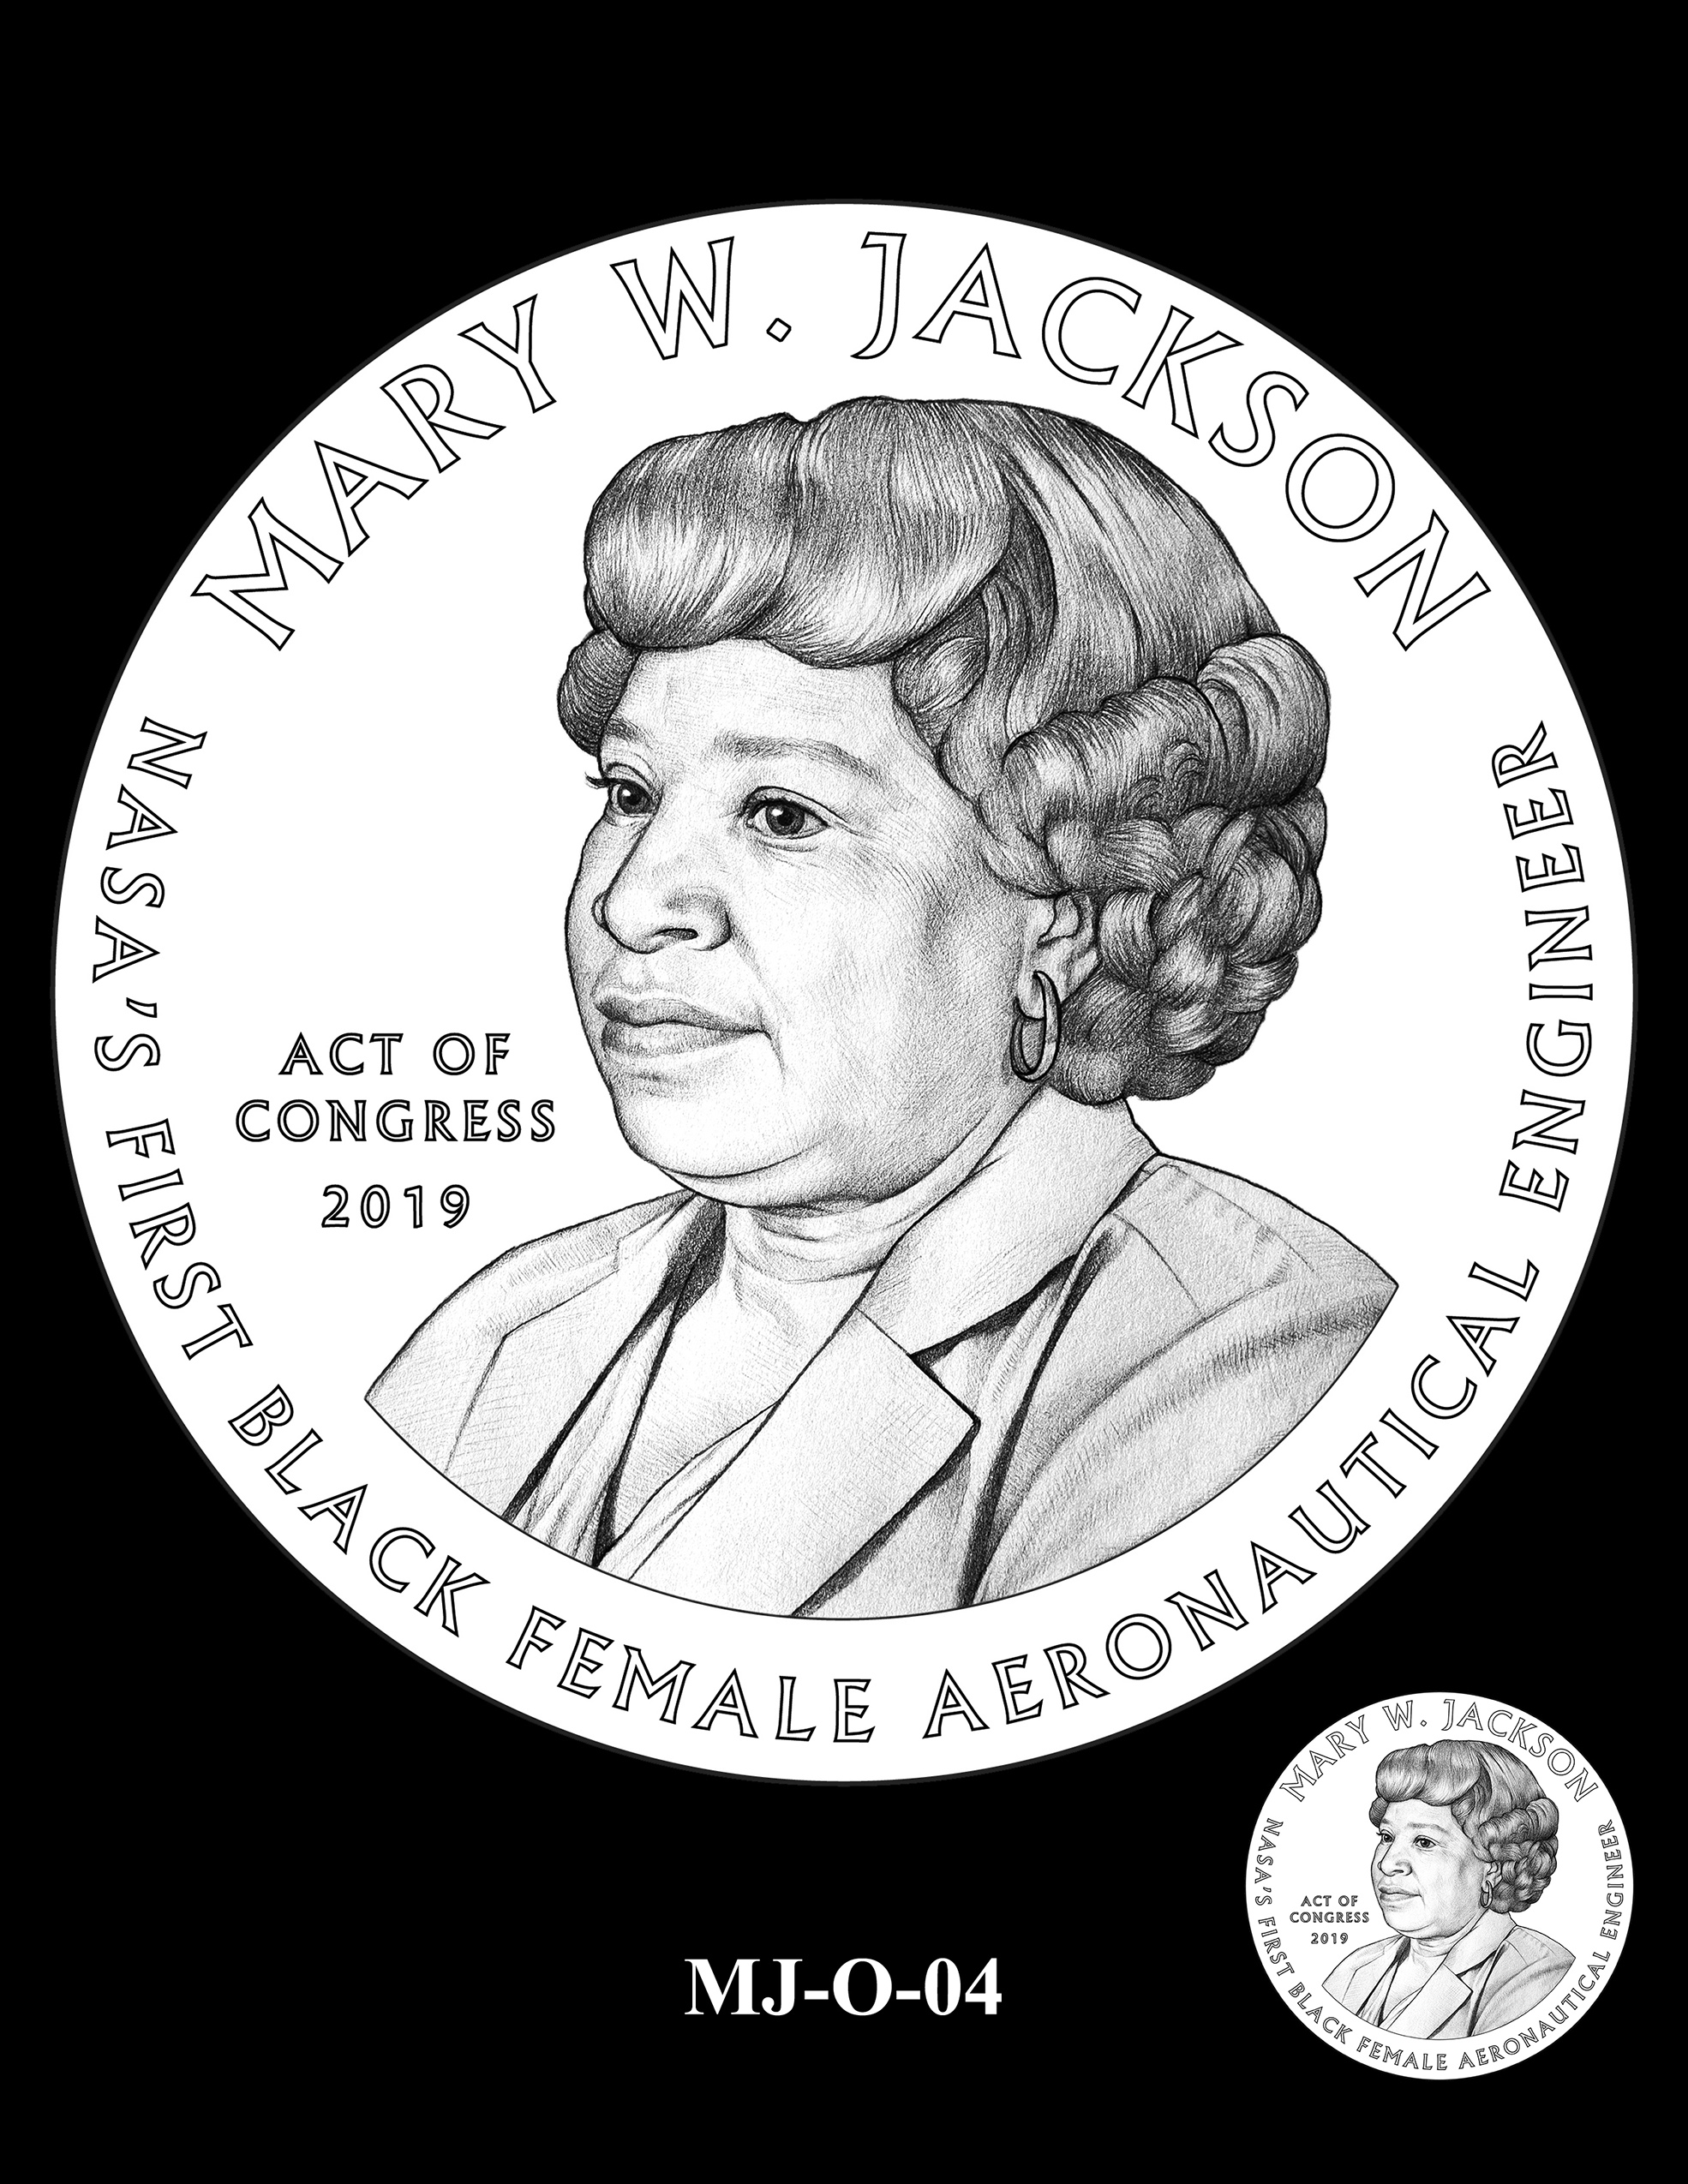 MJ-O-04 -- Mary W. Jackson Congressional Gold Medal